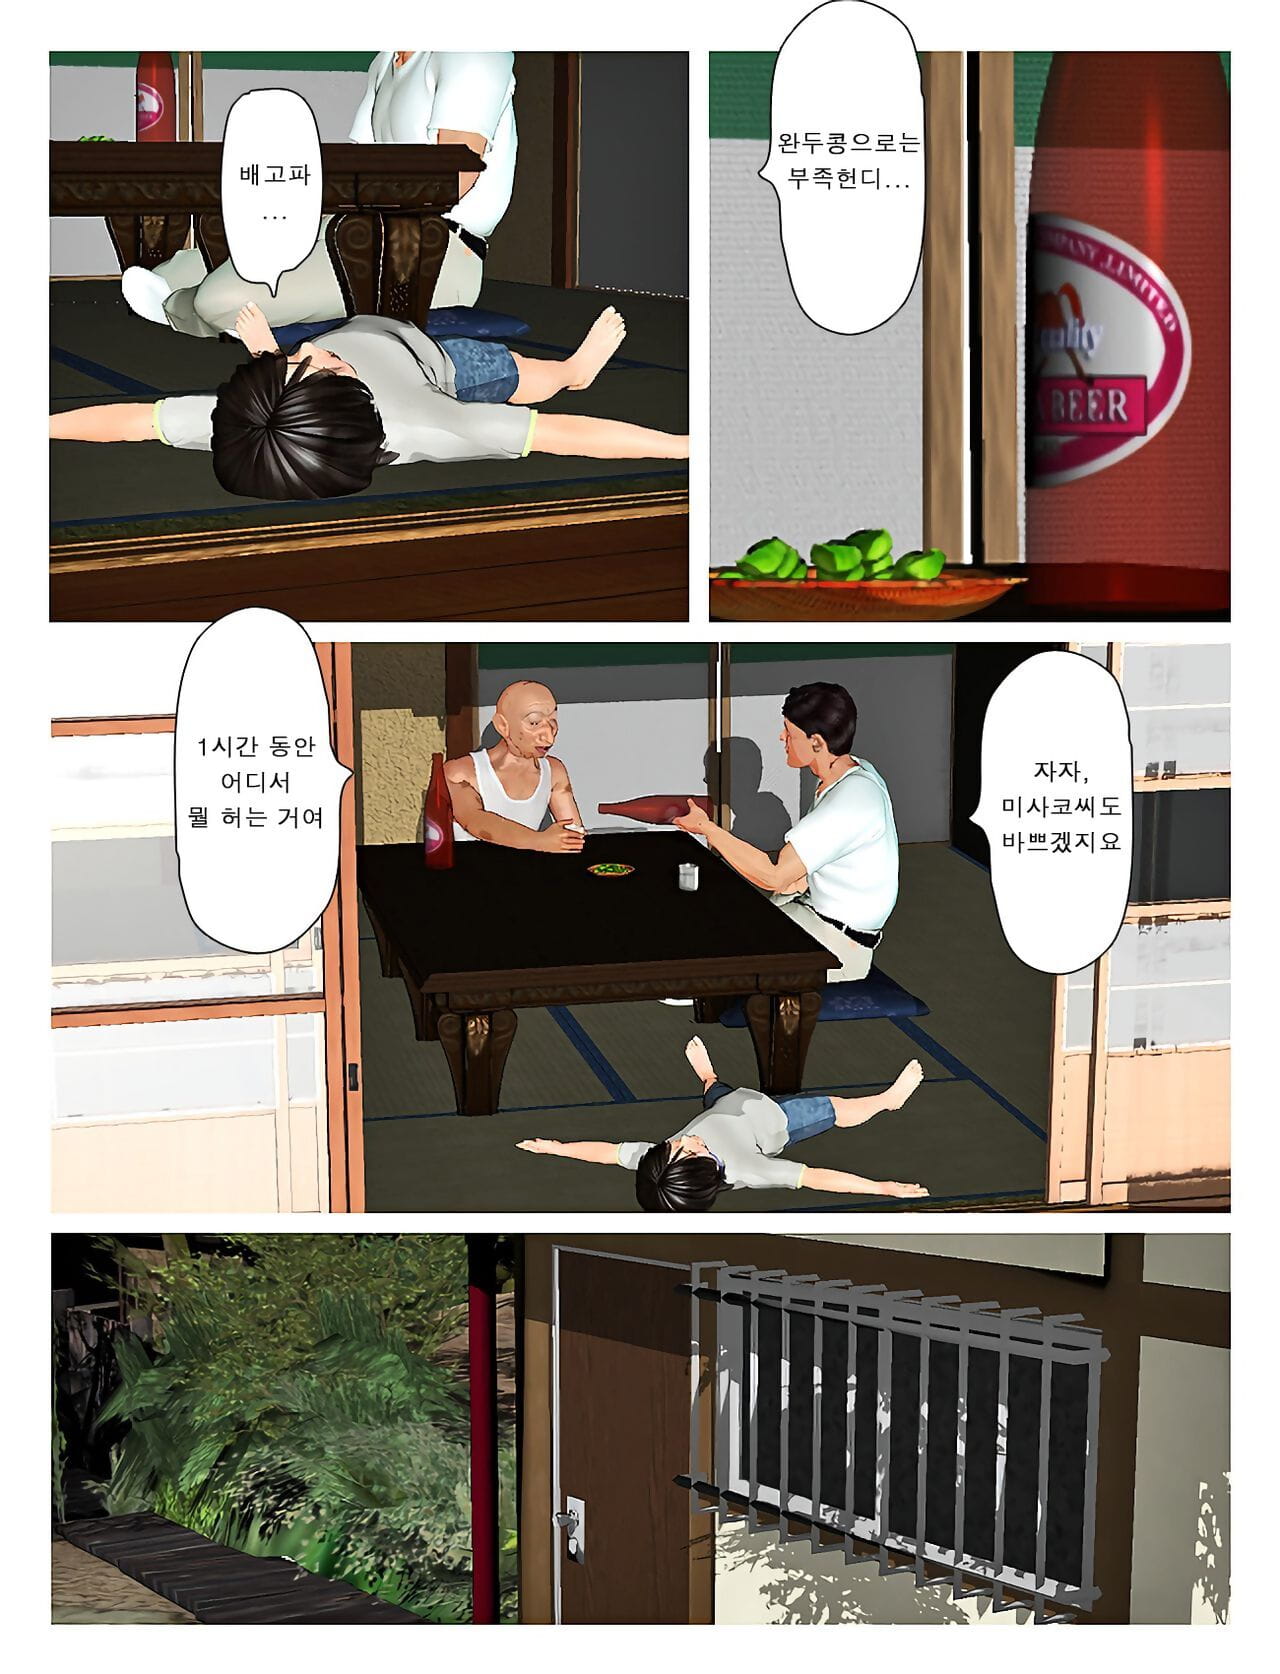 uccidere il Re Kyou no misako san 2019:3 오늘의 미사코씨 2019:3 coreano page 1